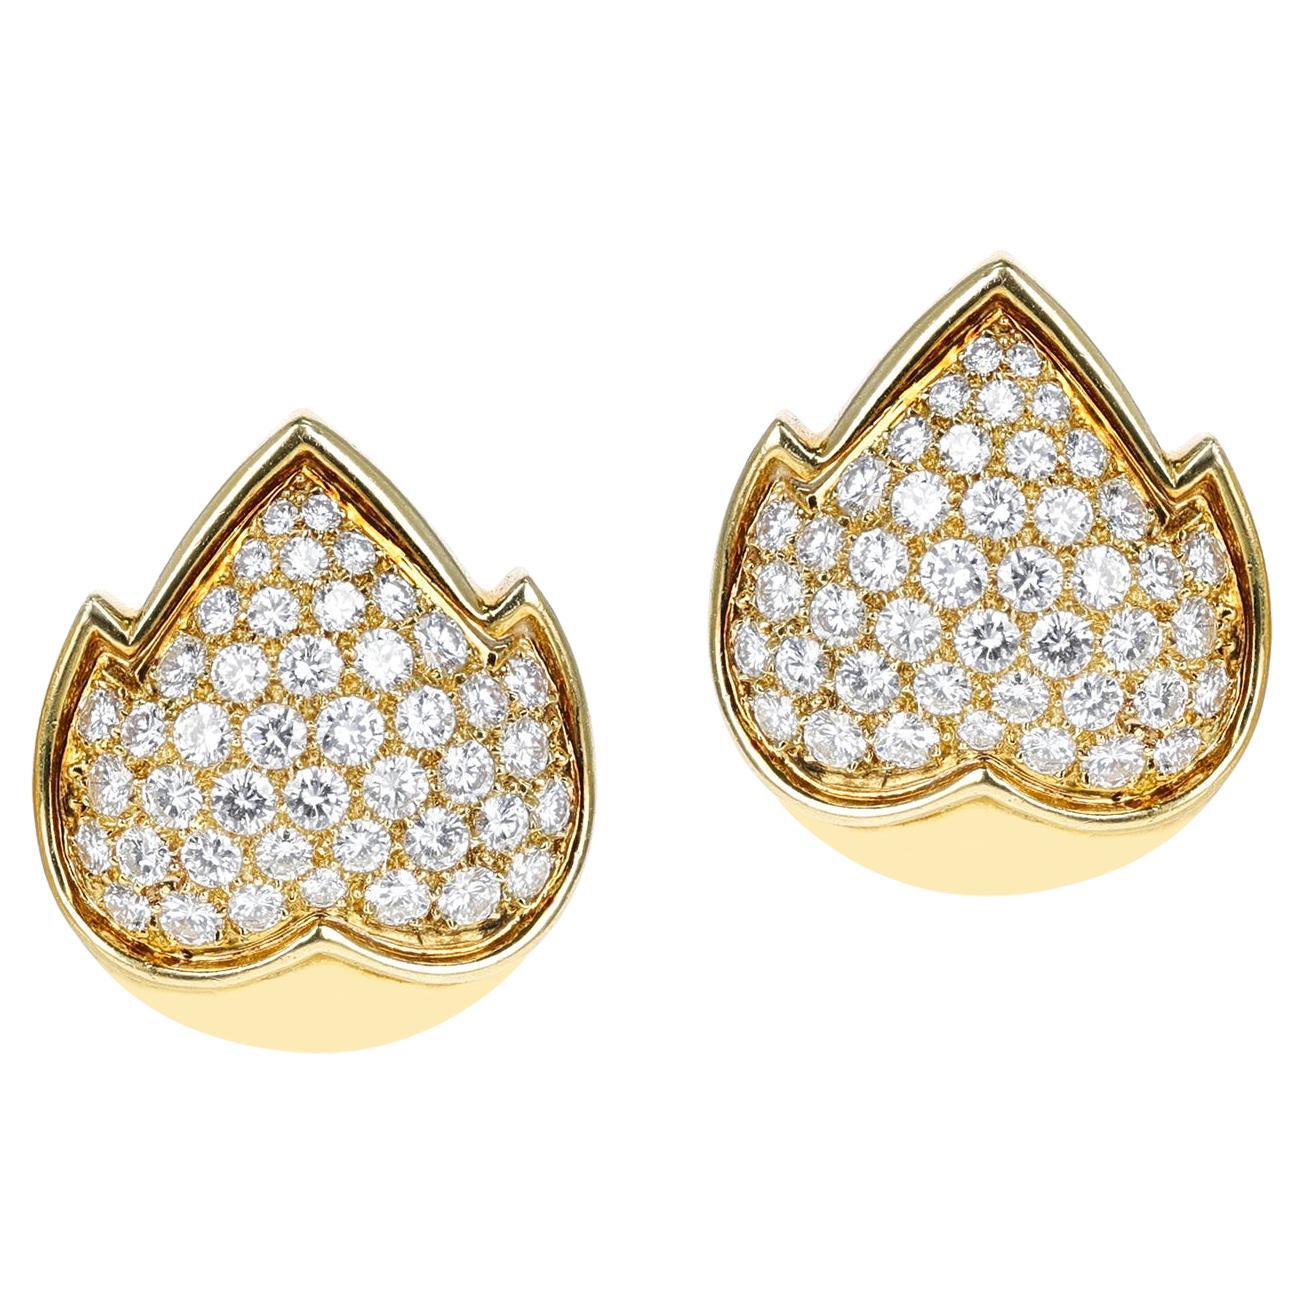 Van Cleef & Arpels Leaf Earrings with 5 Cts. Diamonds, 18K For Sale